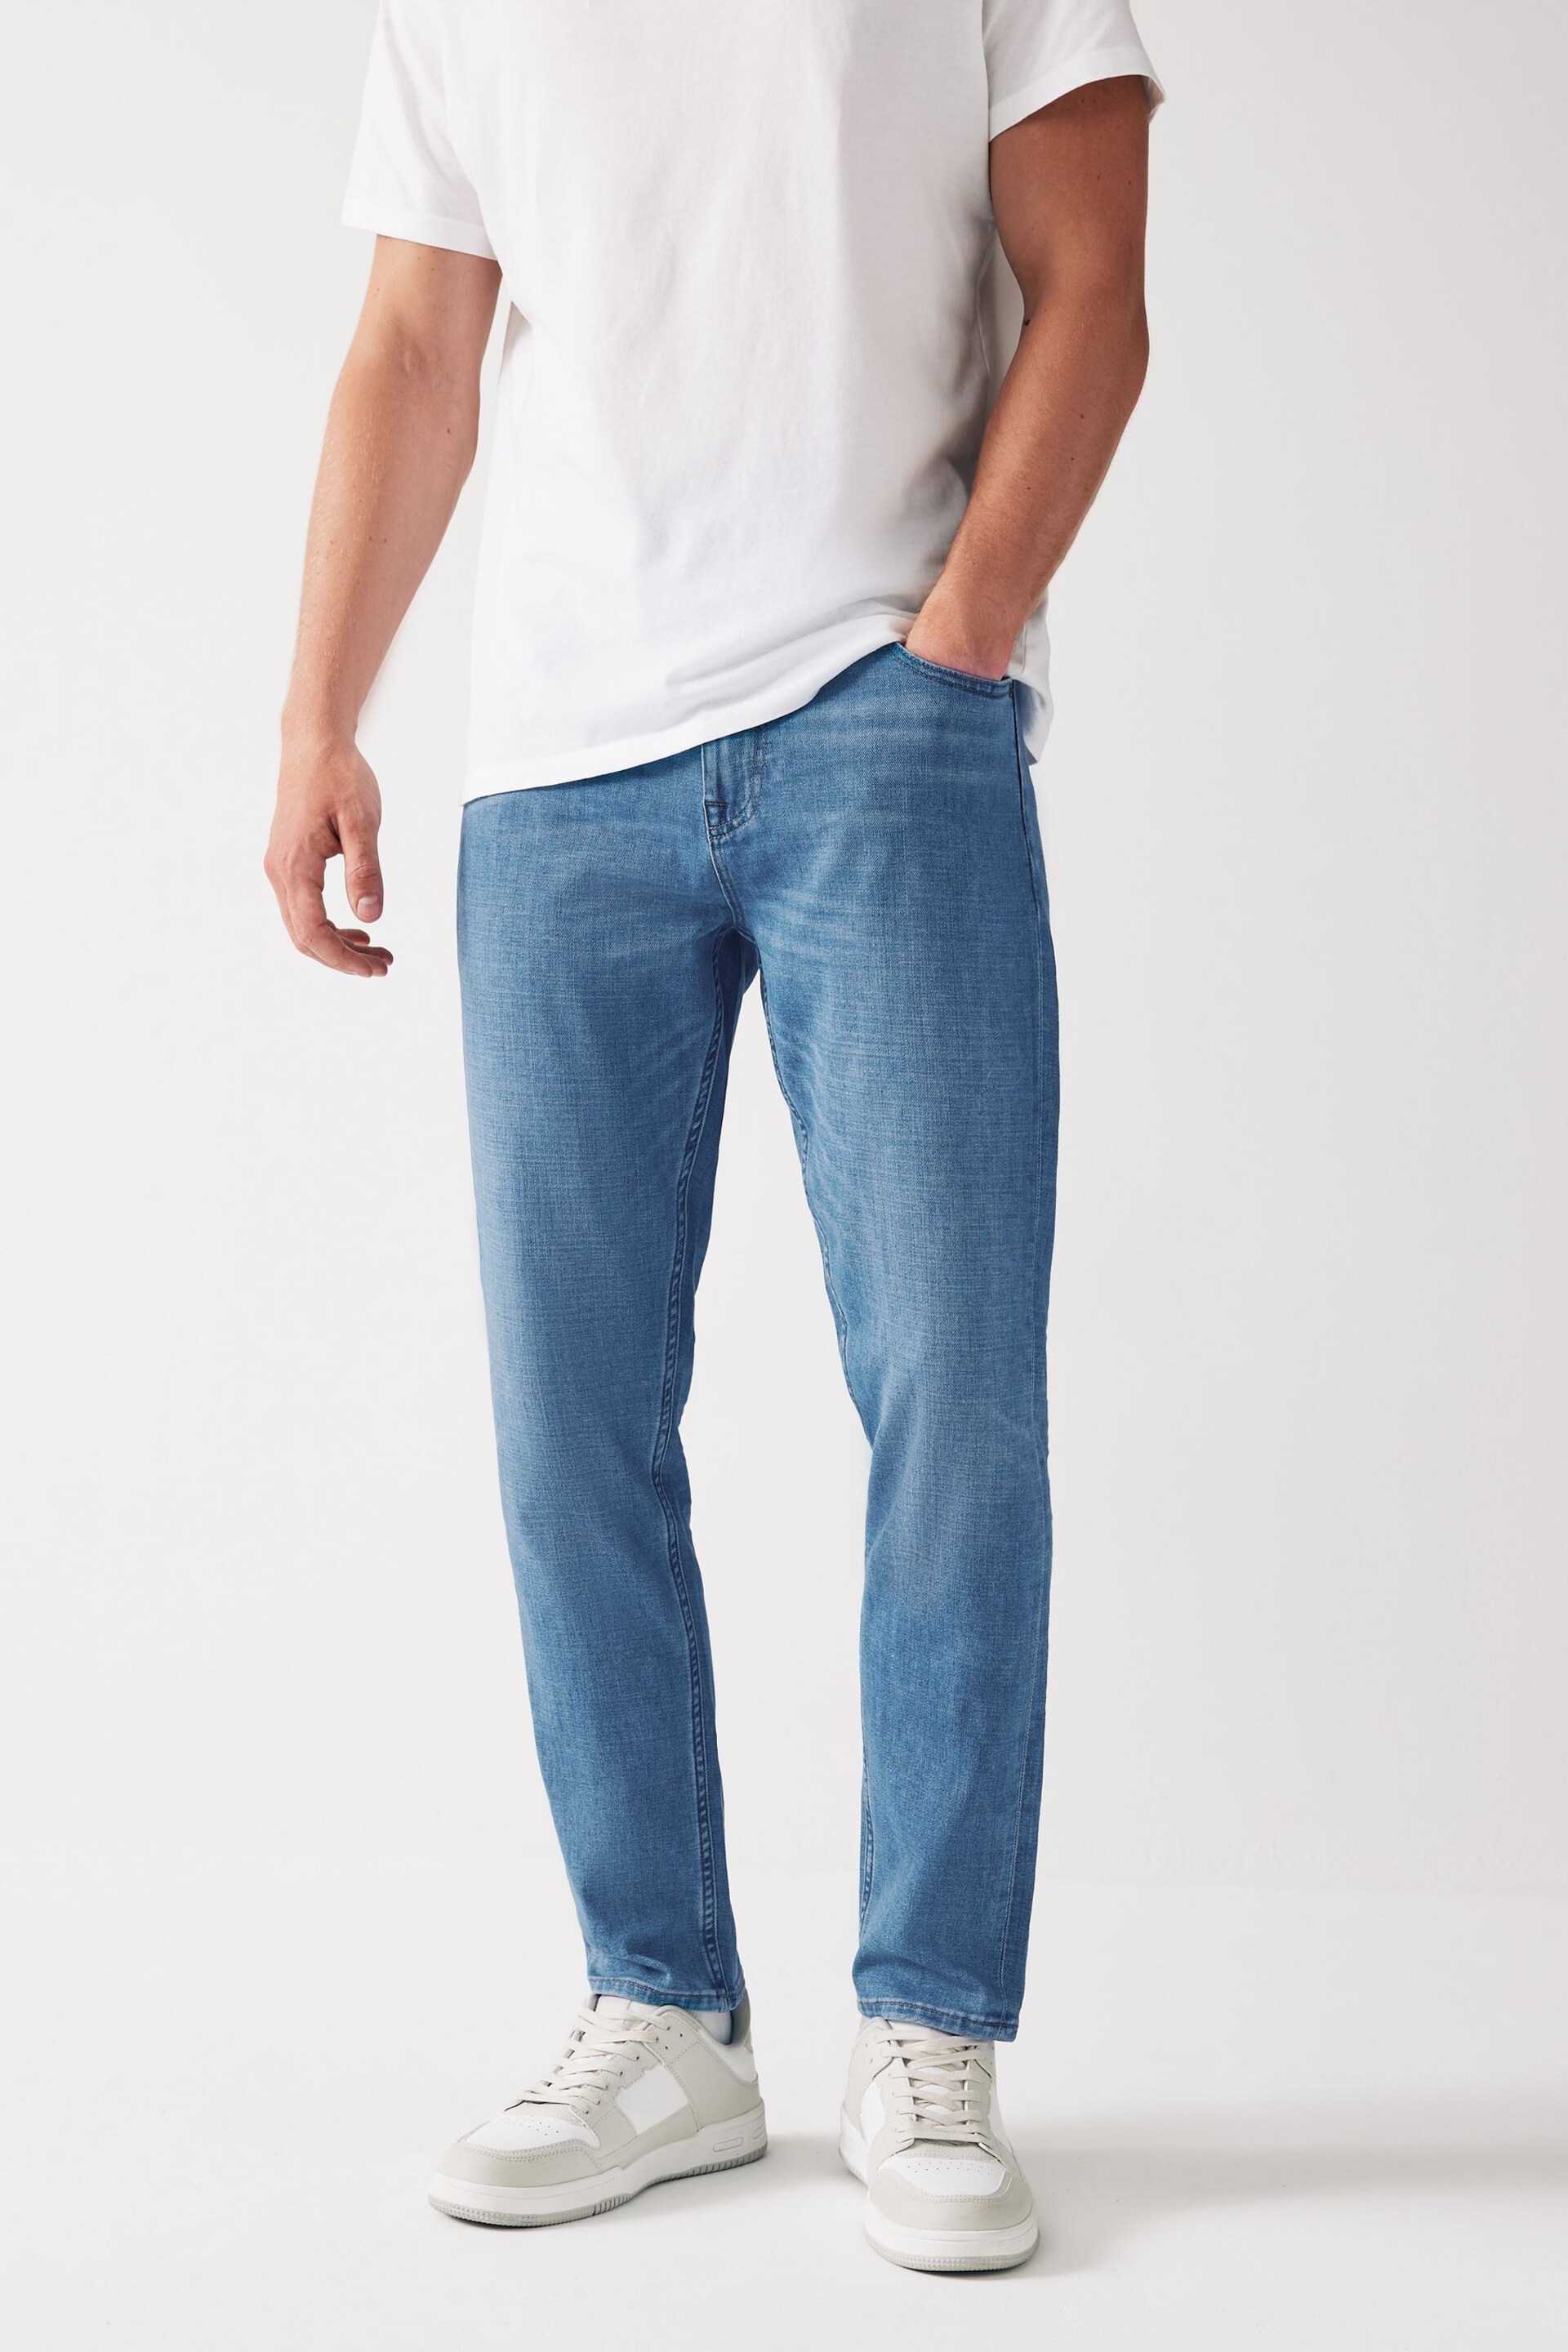 Blue Light Lightweight Jeans - Image 1 of 8